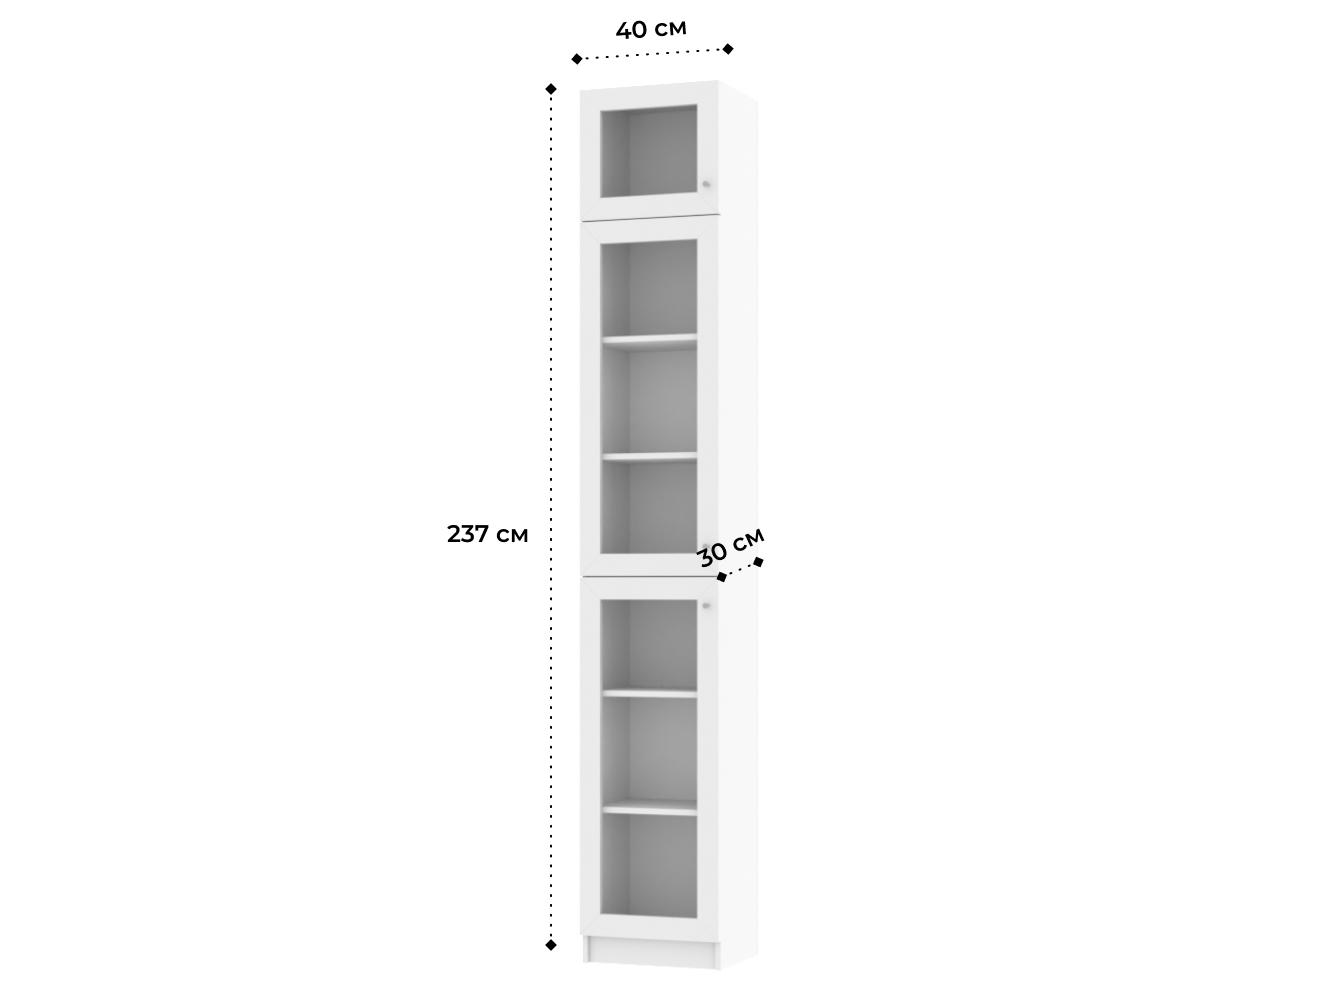  Книжный шкаф Билли 381 white ИКЕА (IKEA) изображение товара